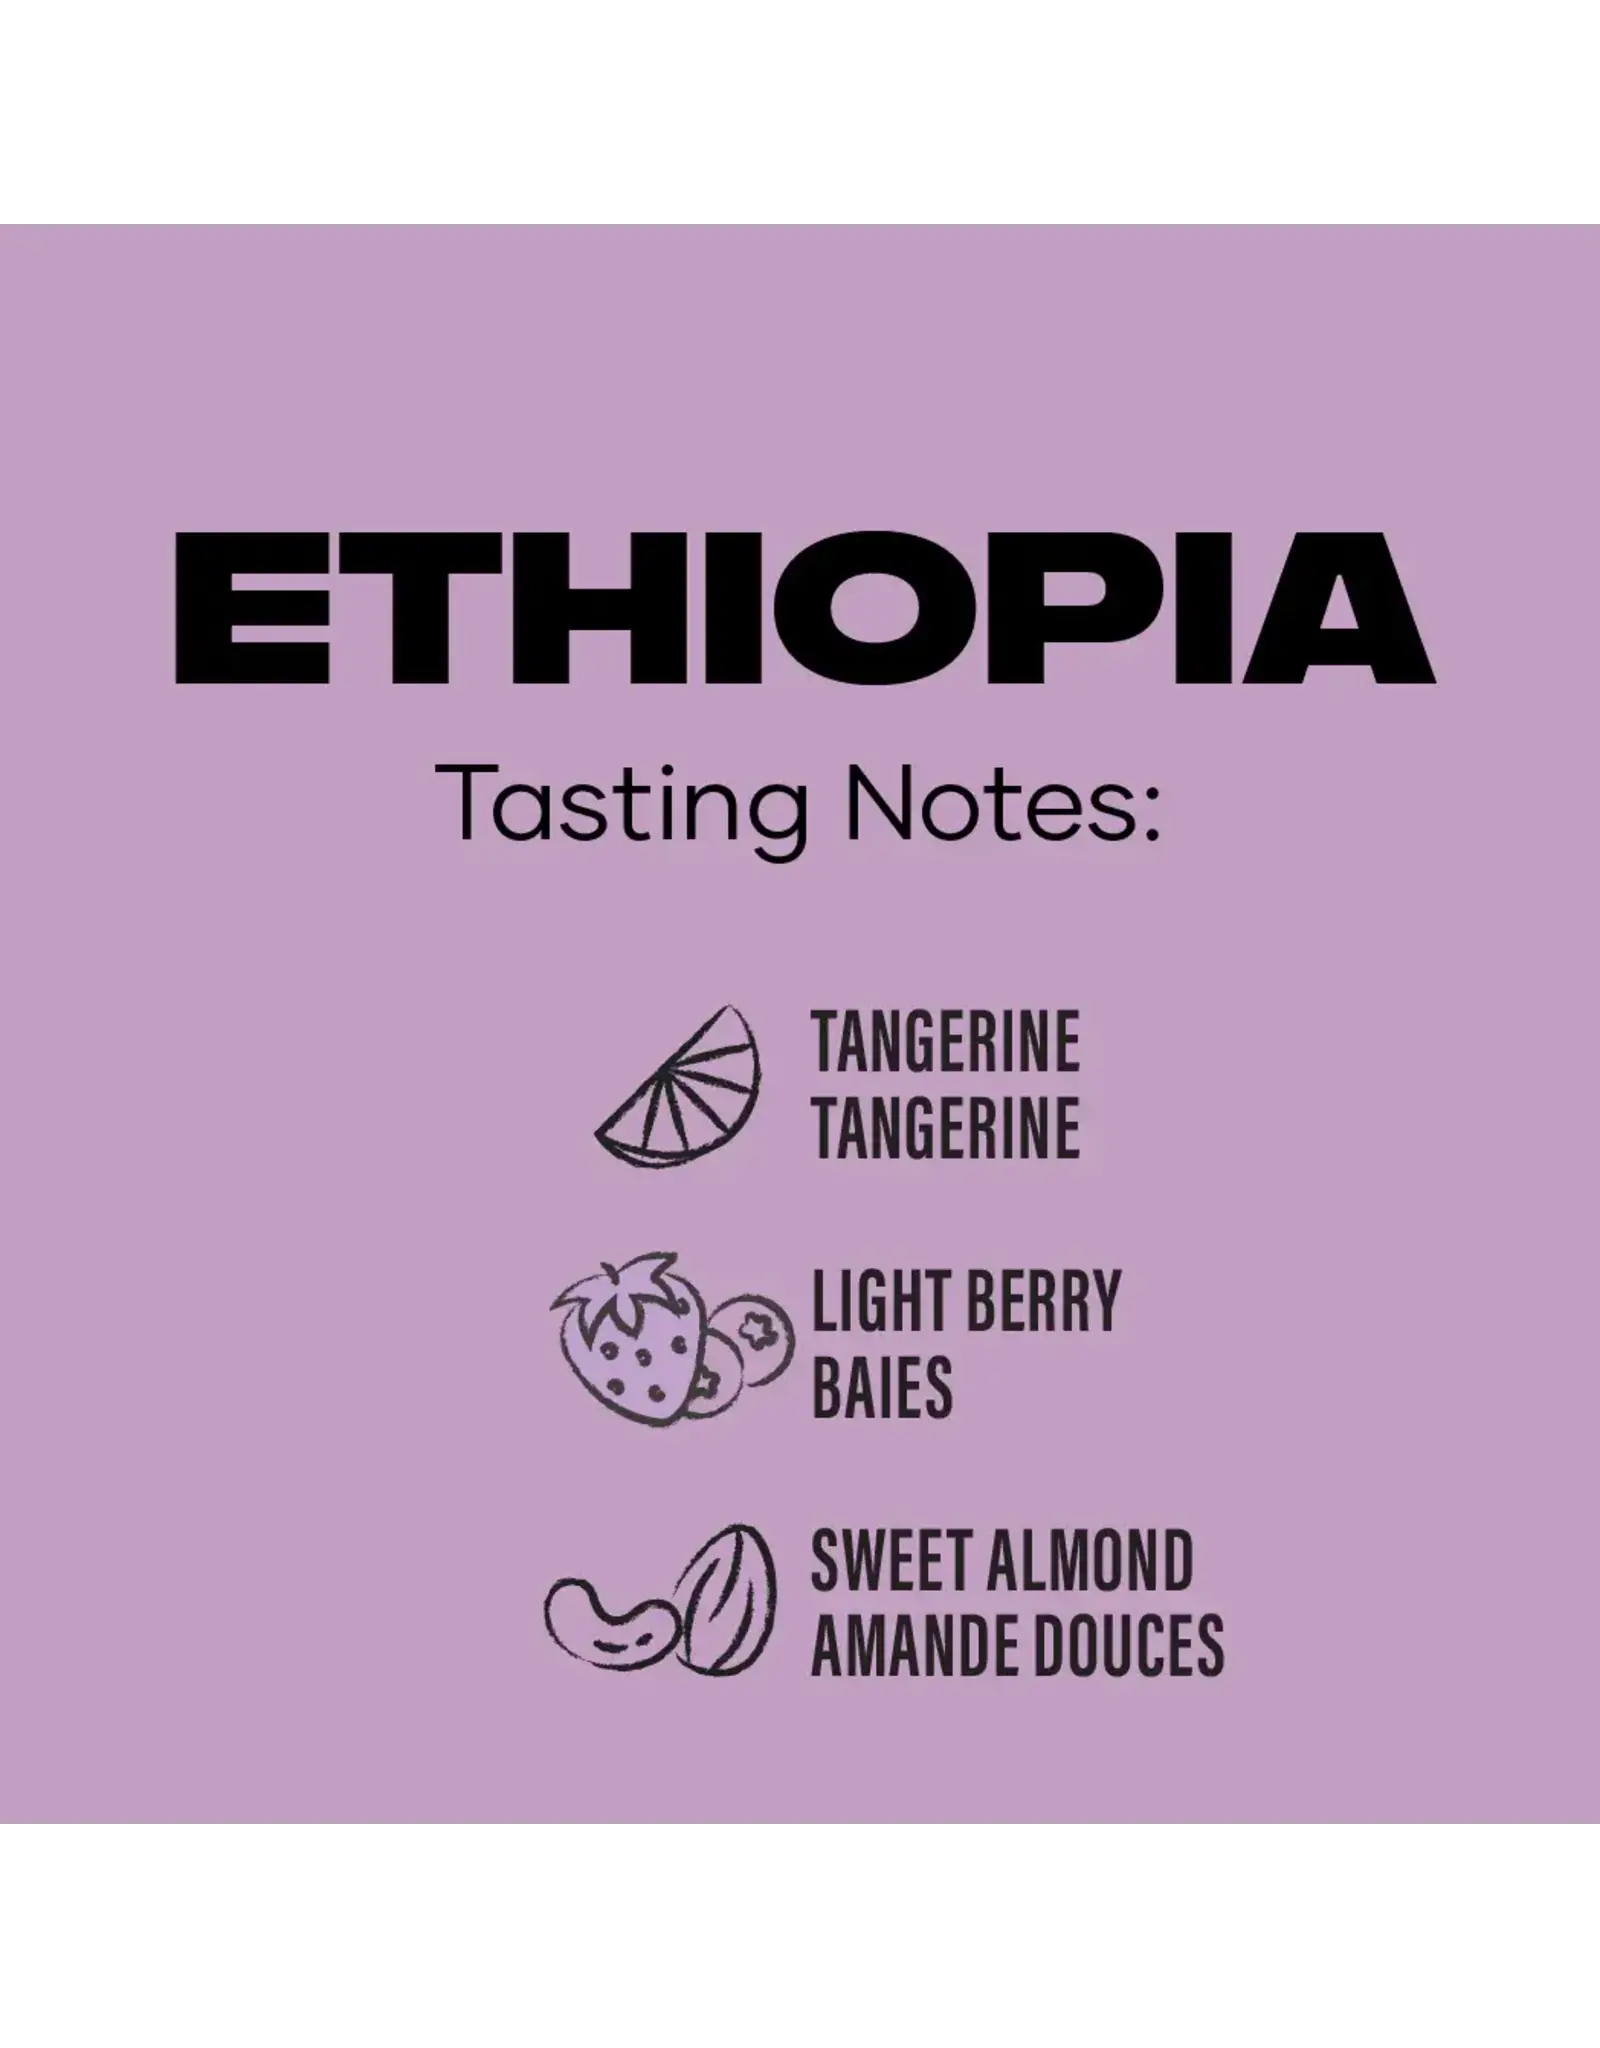 Ethiopia Level Ground Coffee - Ethiopia - 300g